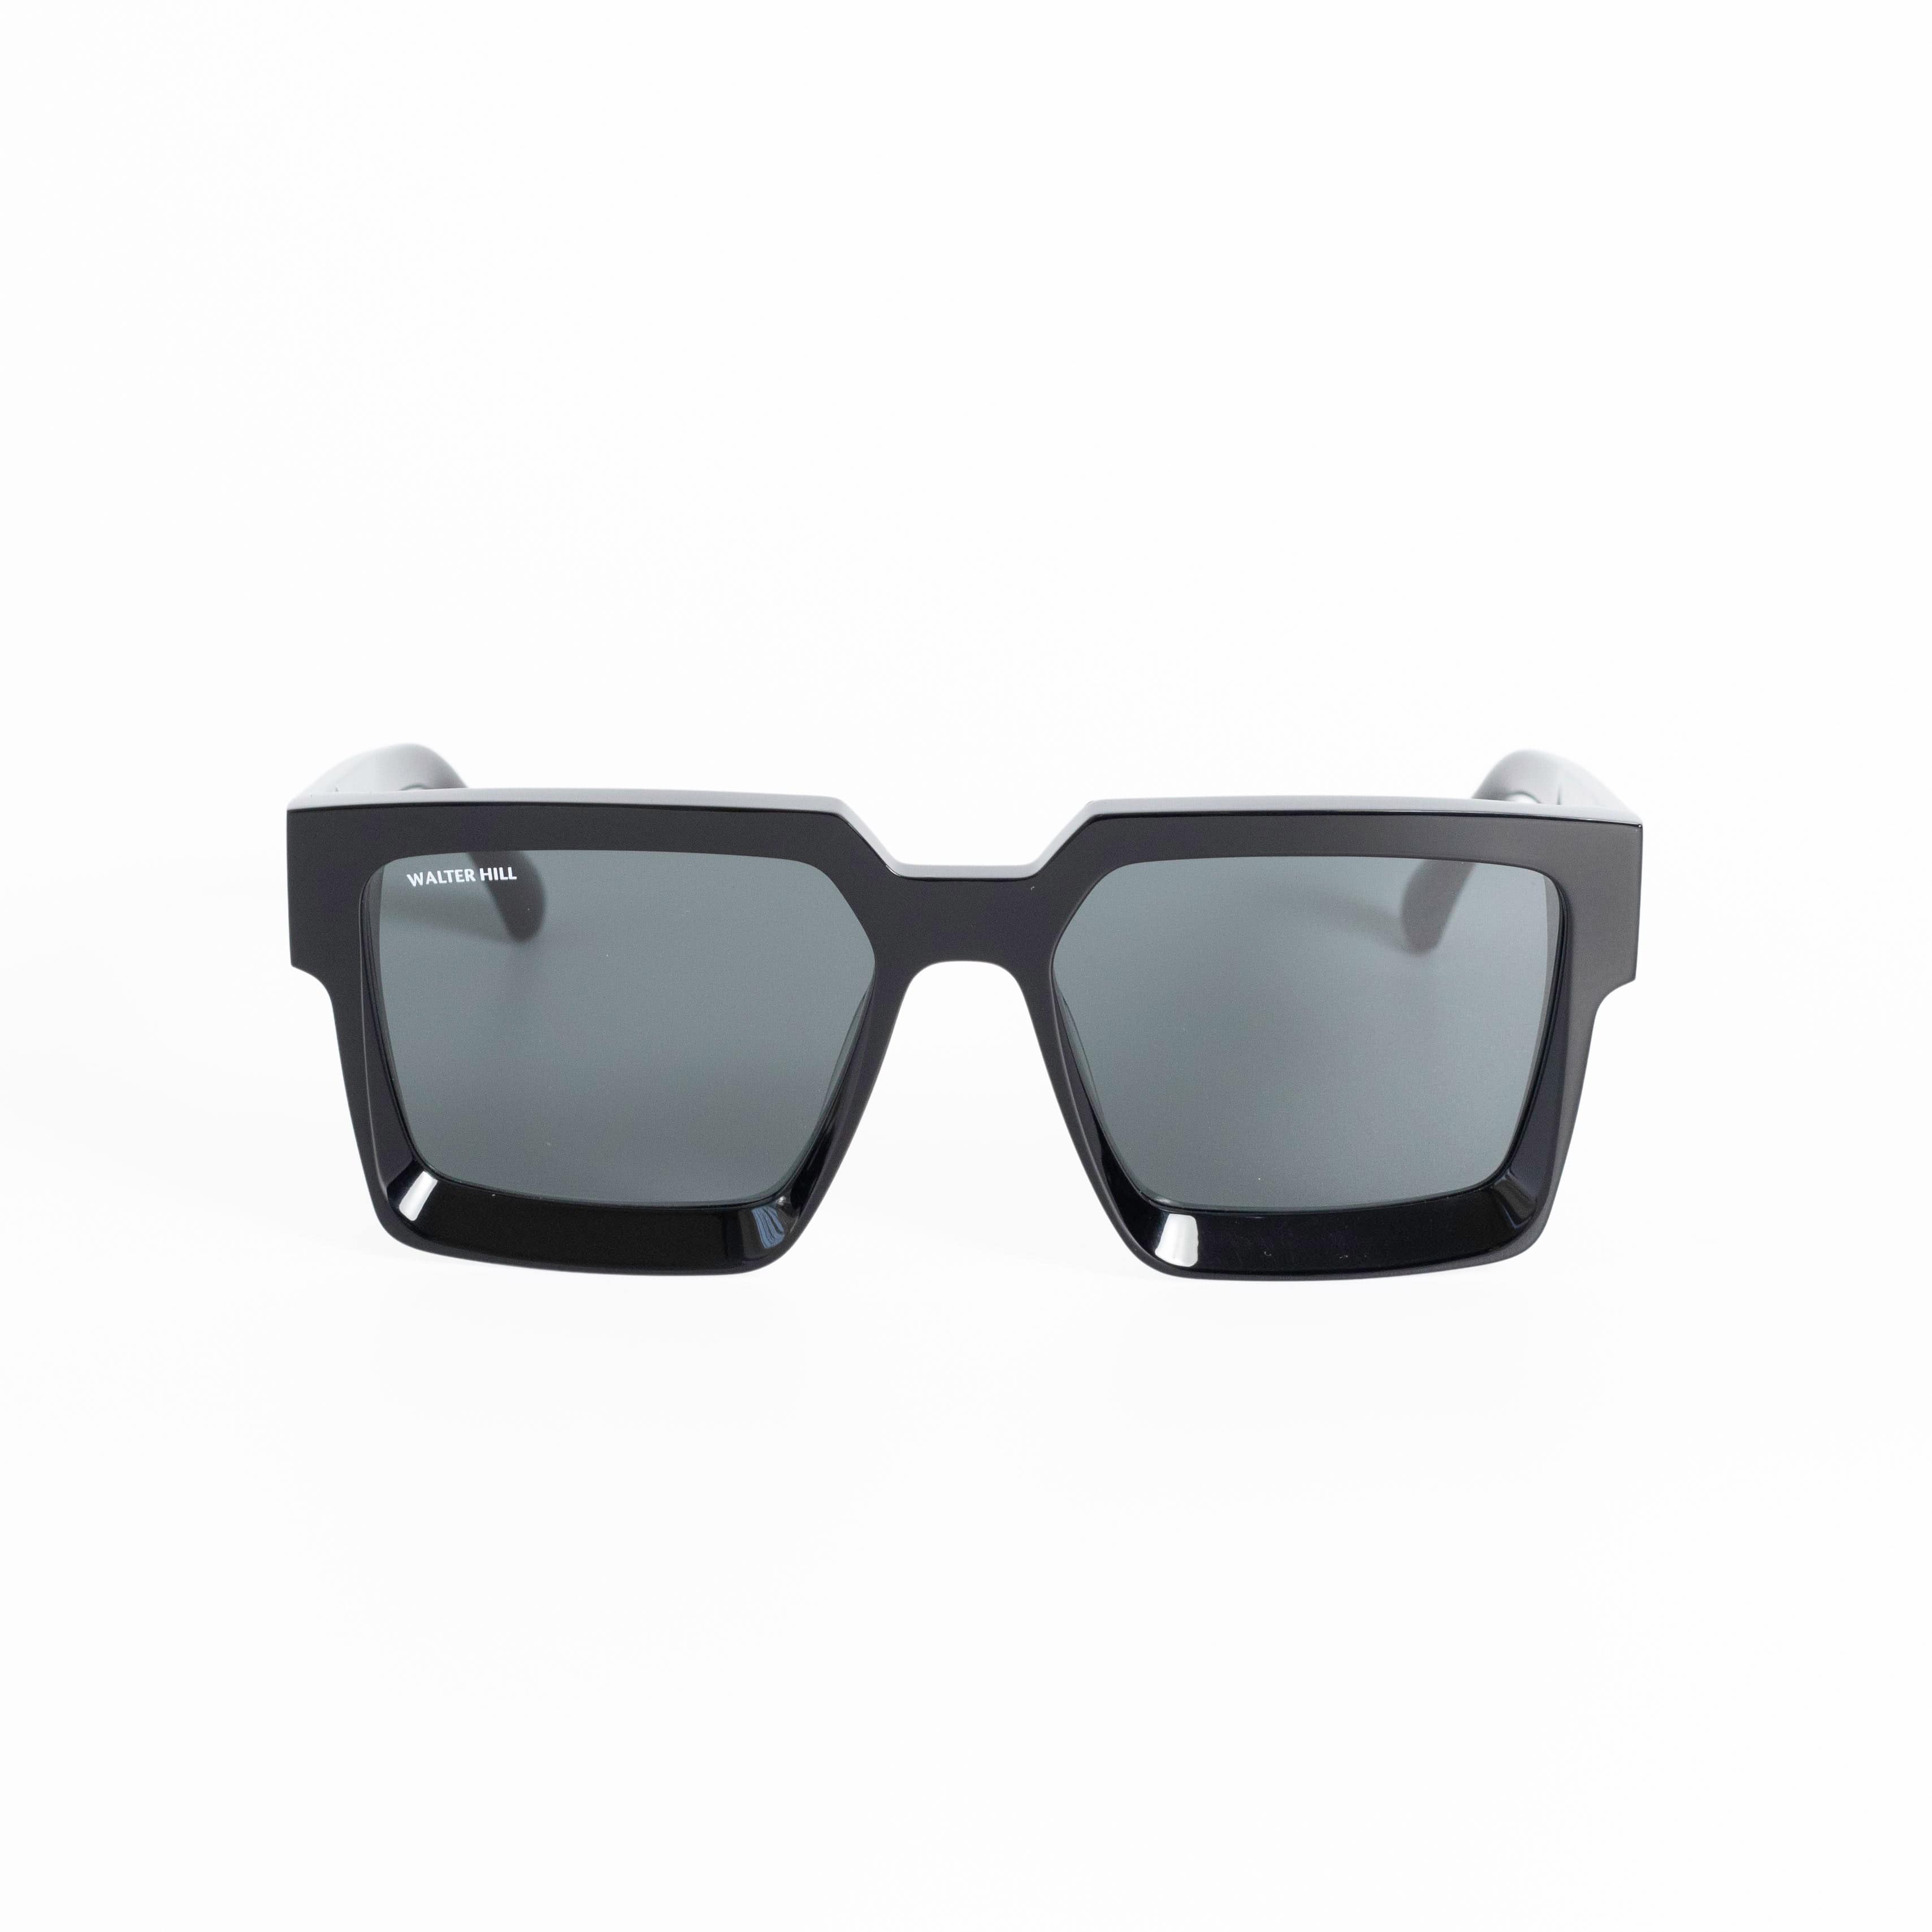 Walter Hill Sunglasses Oversized SKY - Black